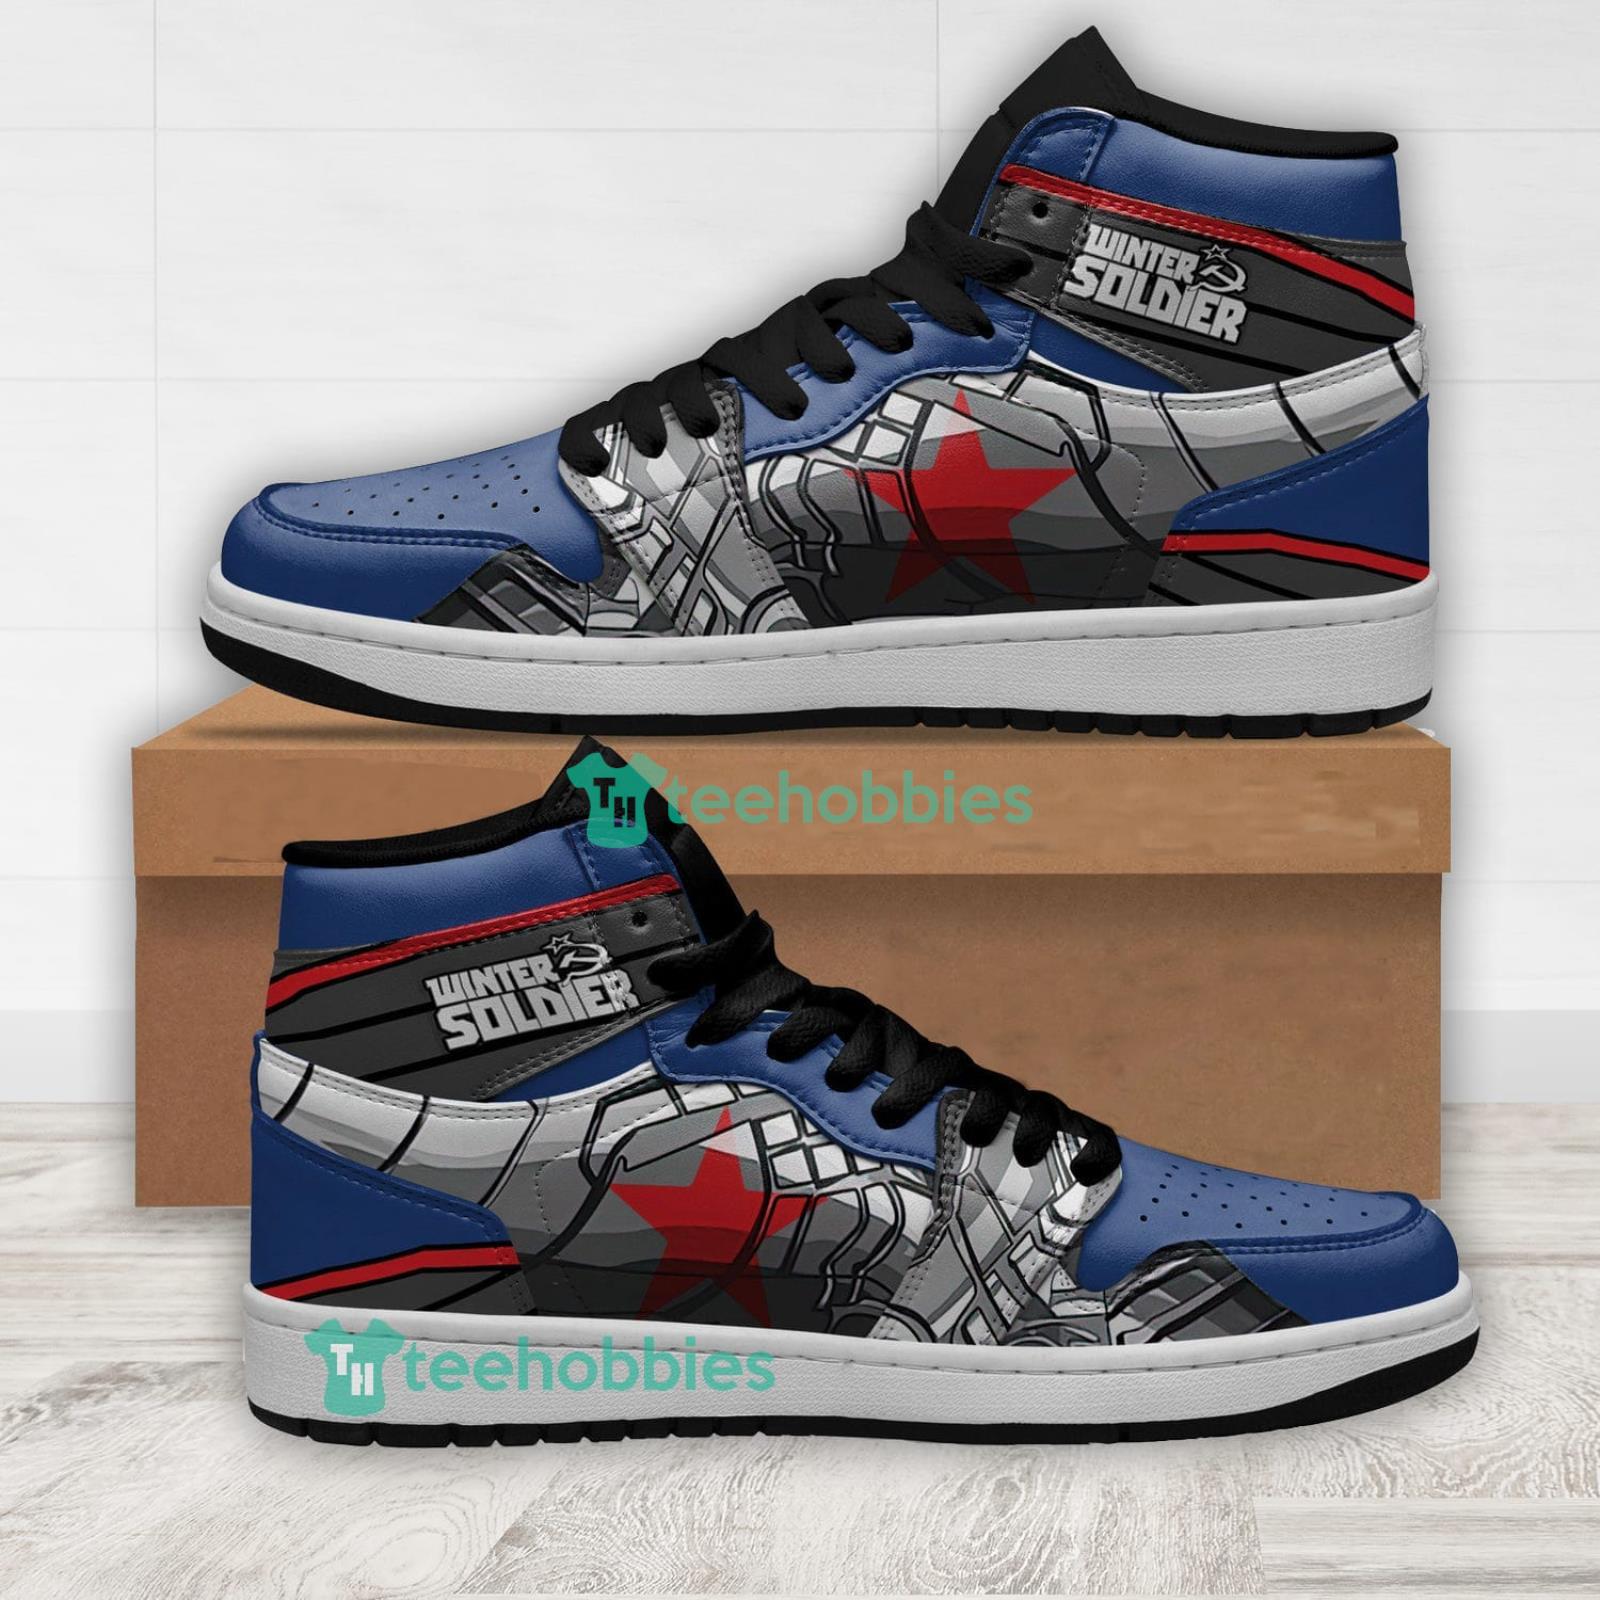 Winter Soldier Air Jordan Hightop Shoes Sneakers For Men And Women Super Heroes Sneakers Product Photo 1